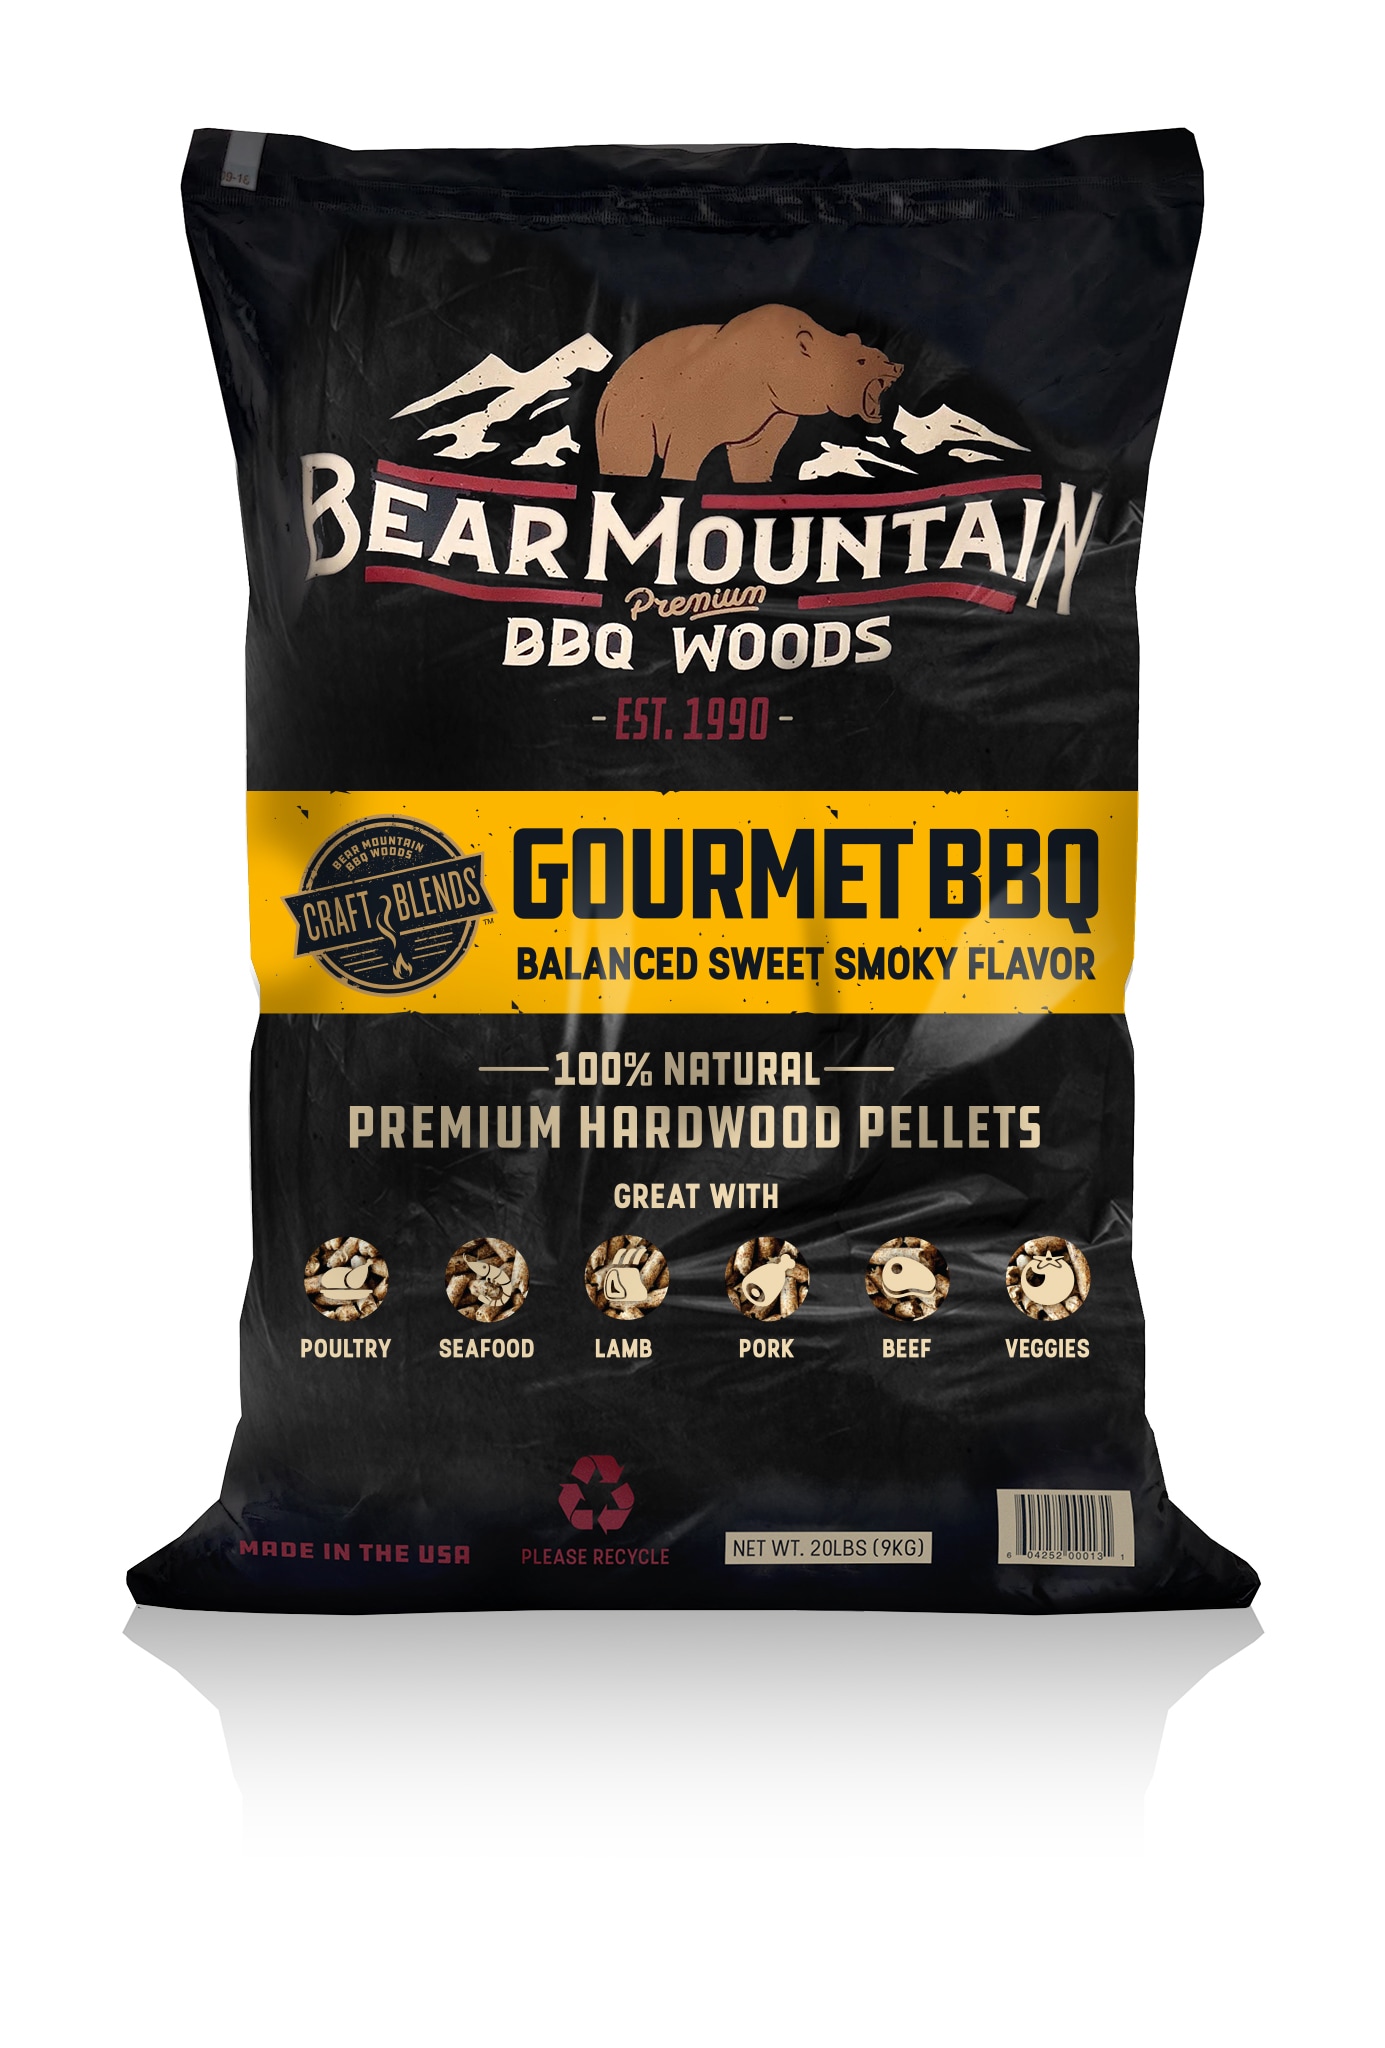 Ronde Verschrikkelijk Vervullen Bear Mountain BBQ Gourmet 20-lb Wood Pellets in the Grill Pellets  department at Lowes.com